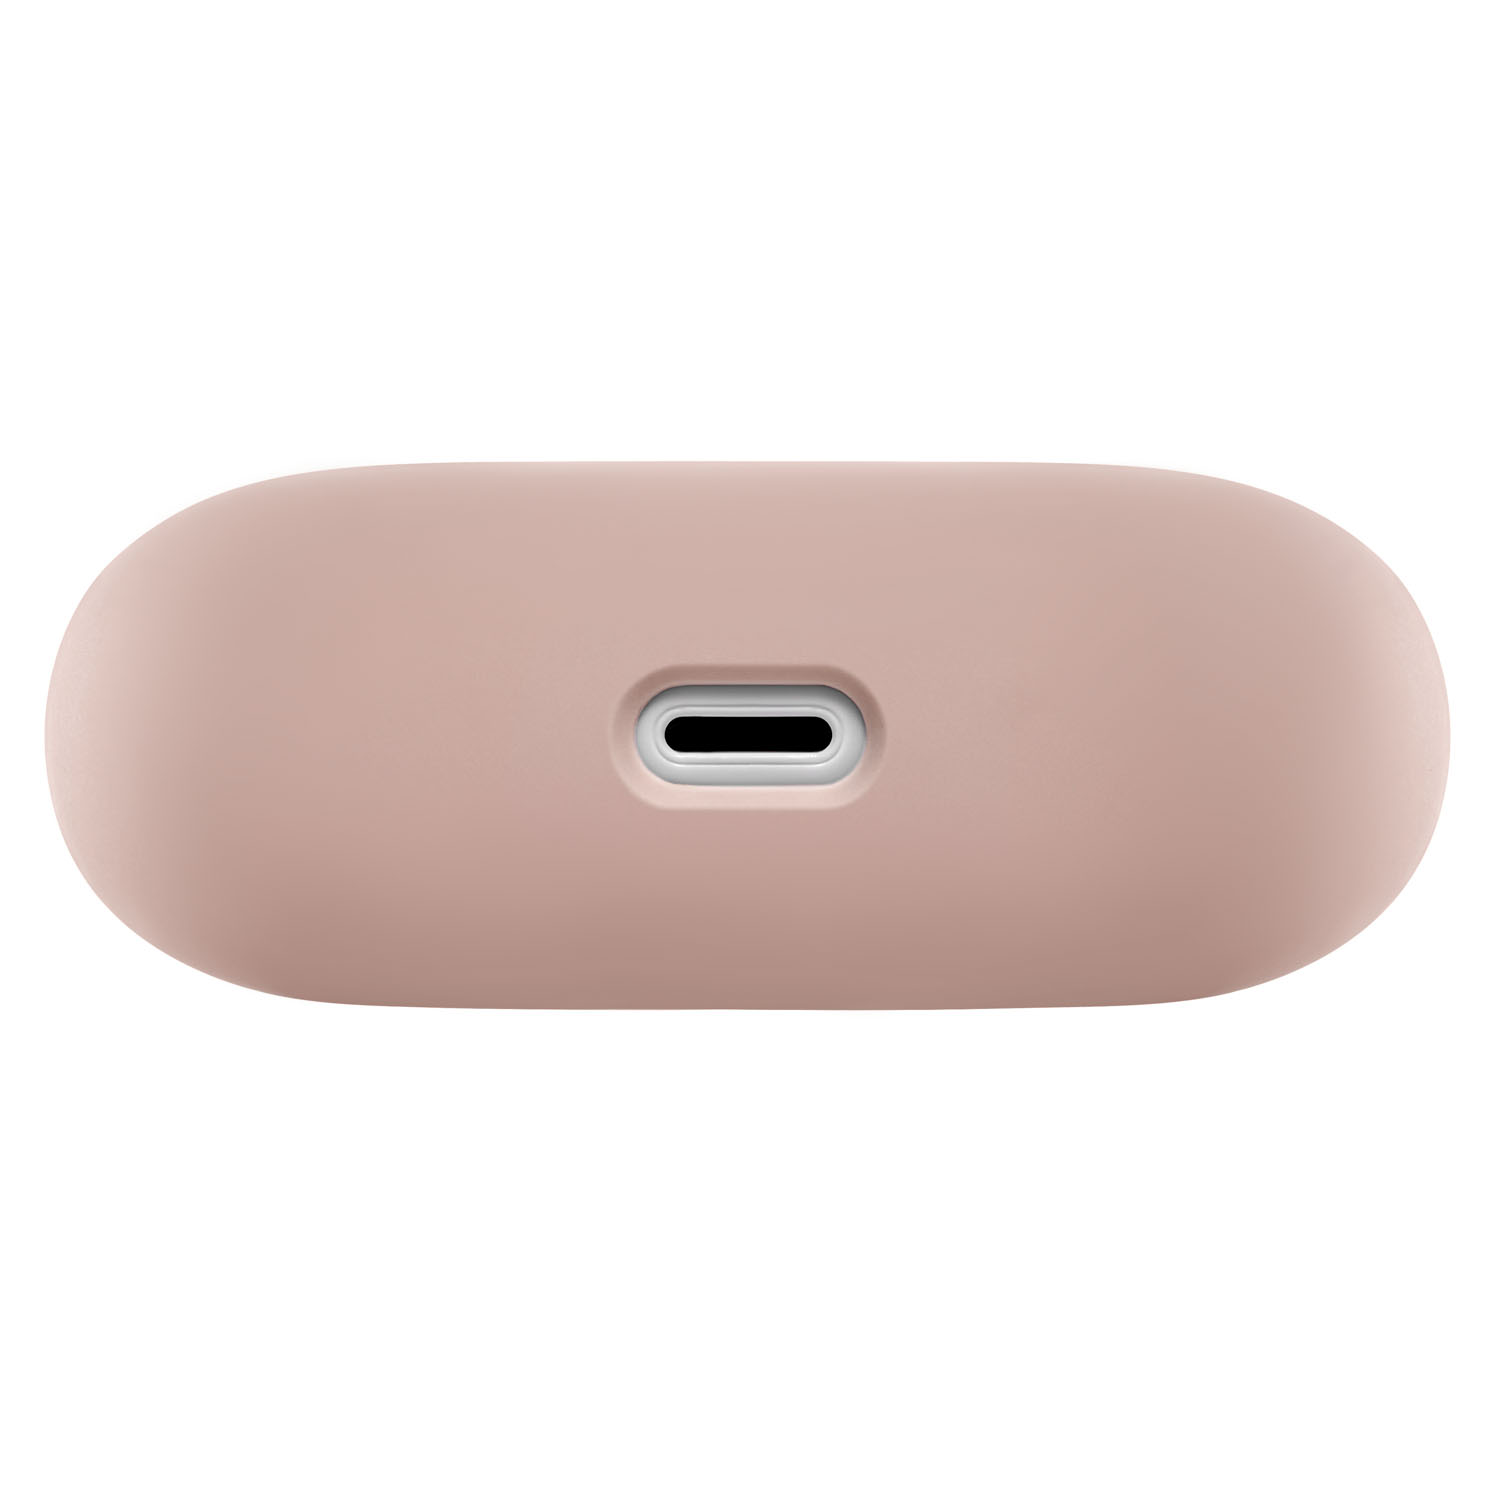 Защитный чехол Airpods Pro Touch Pro Silicone Case, 1,5 мм усиленный, розовый